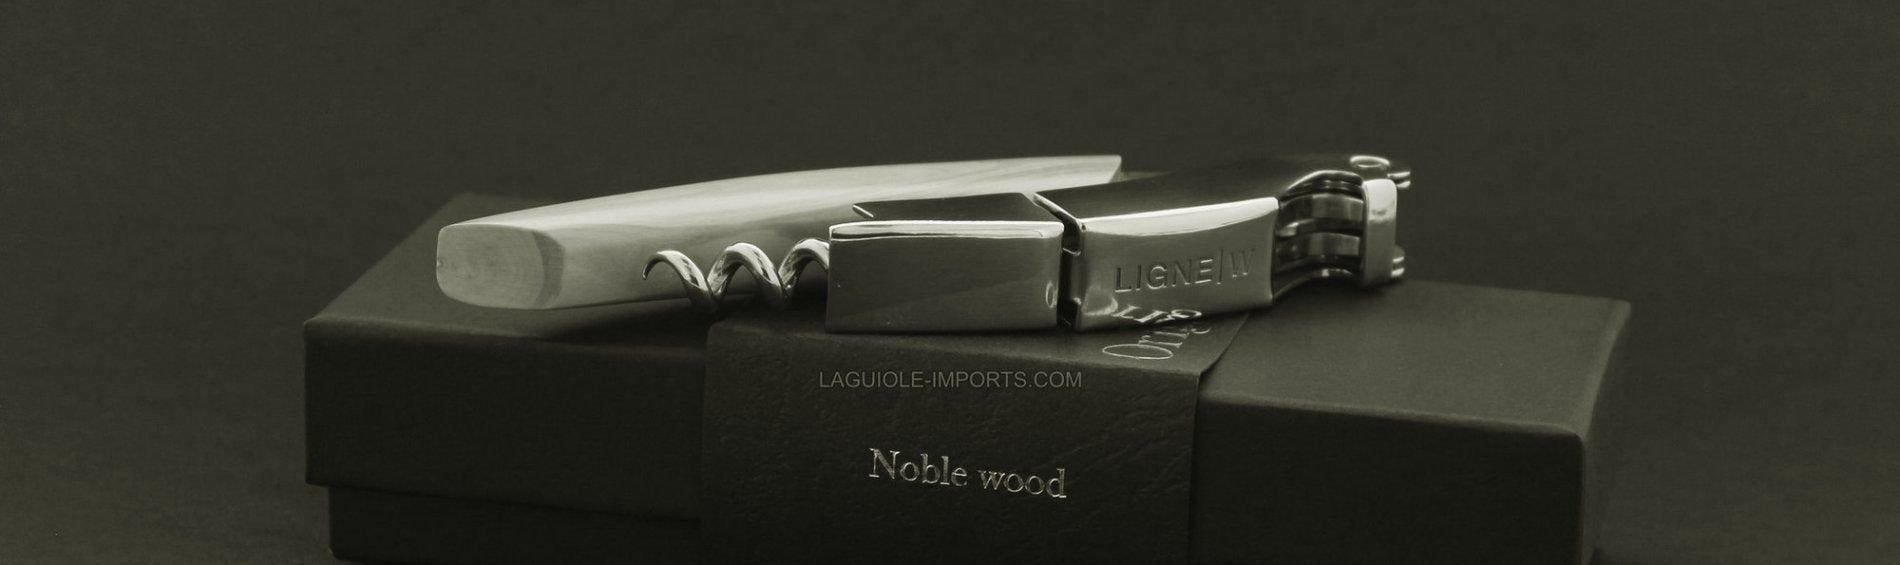 Origine Wood & Horn Handles Corkscrews by Ligne W